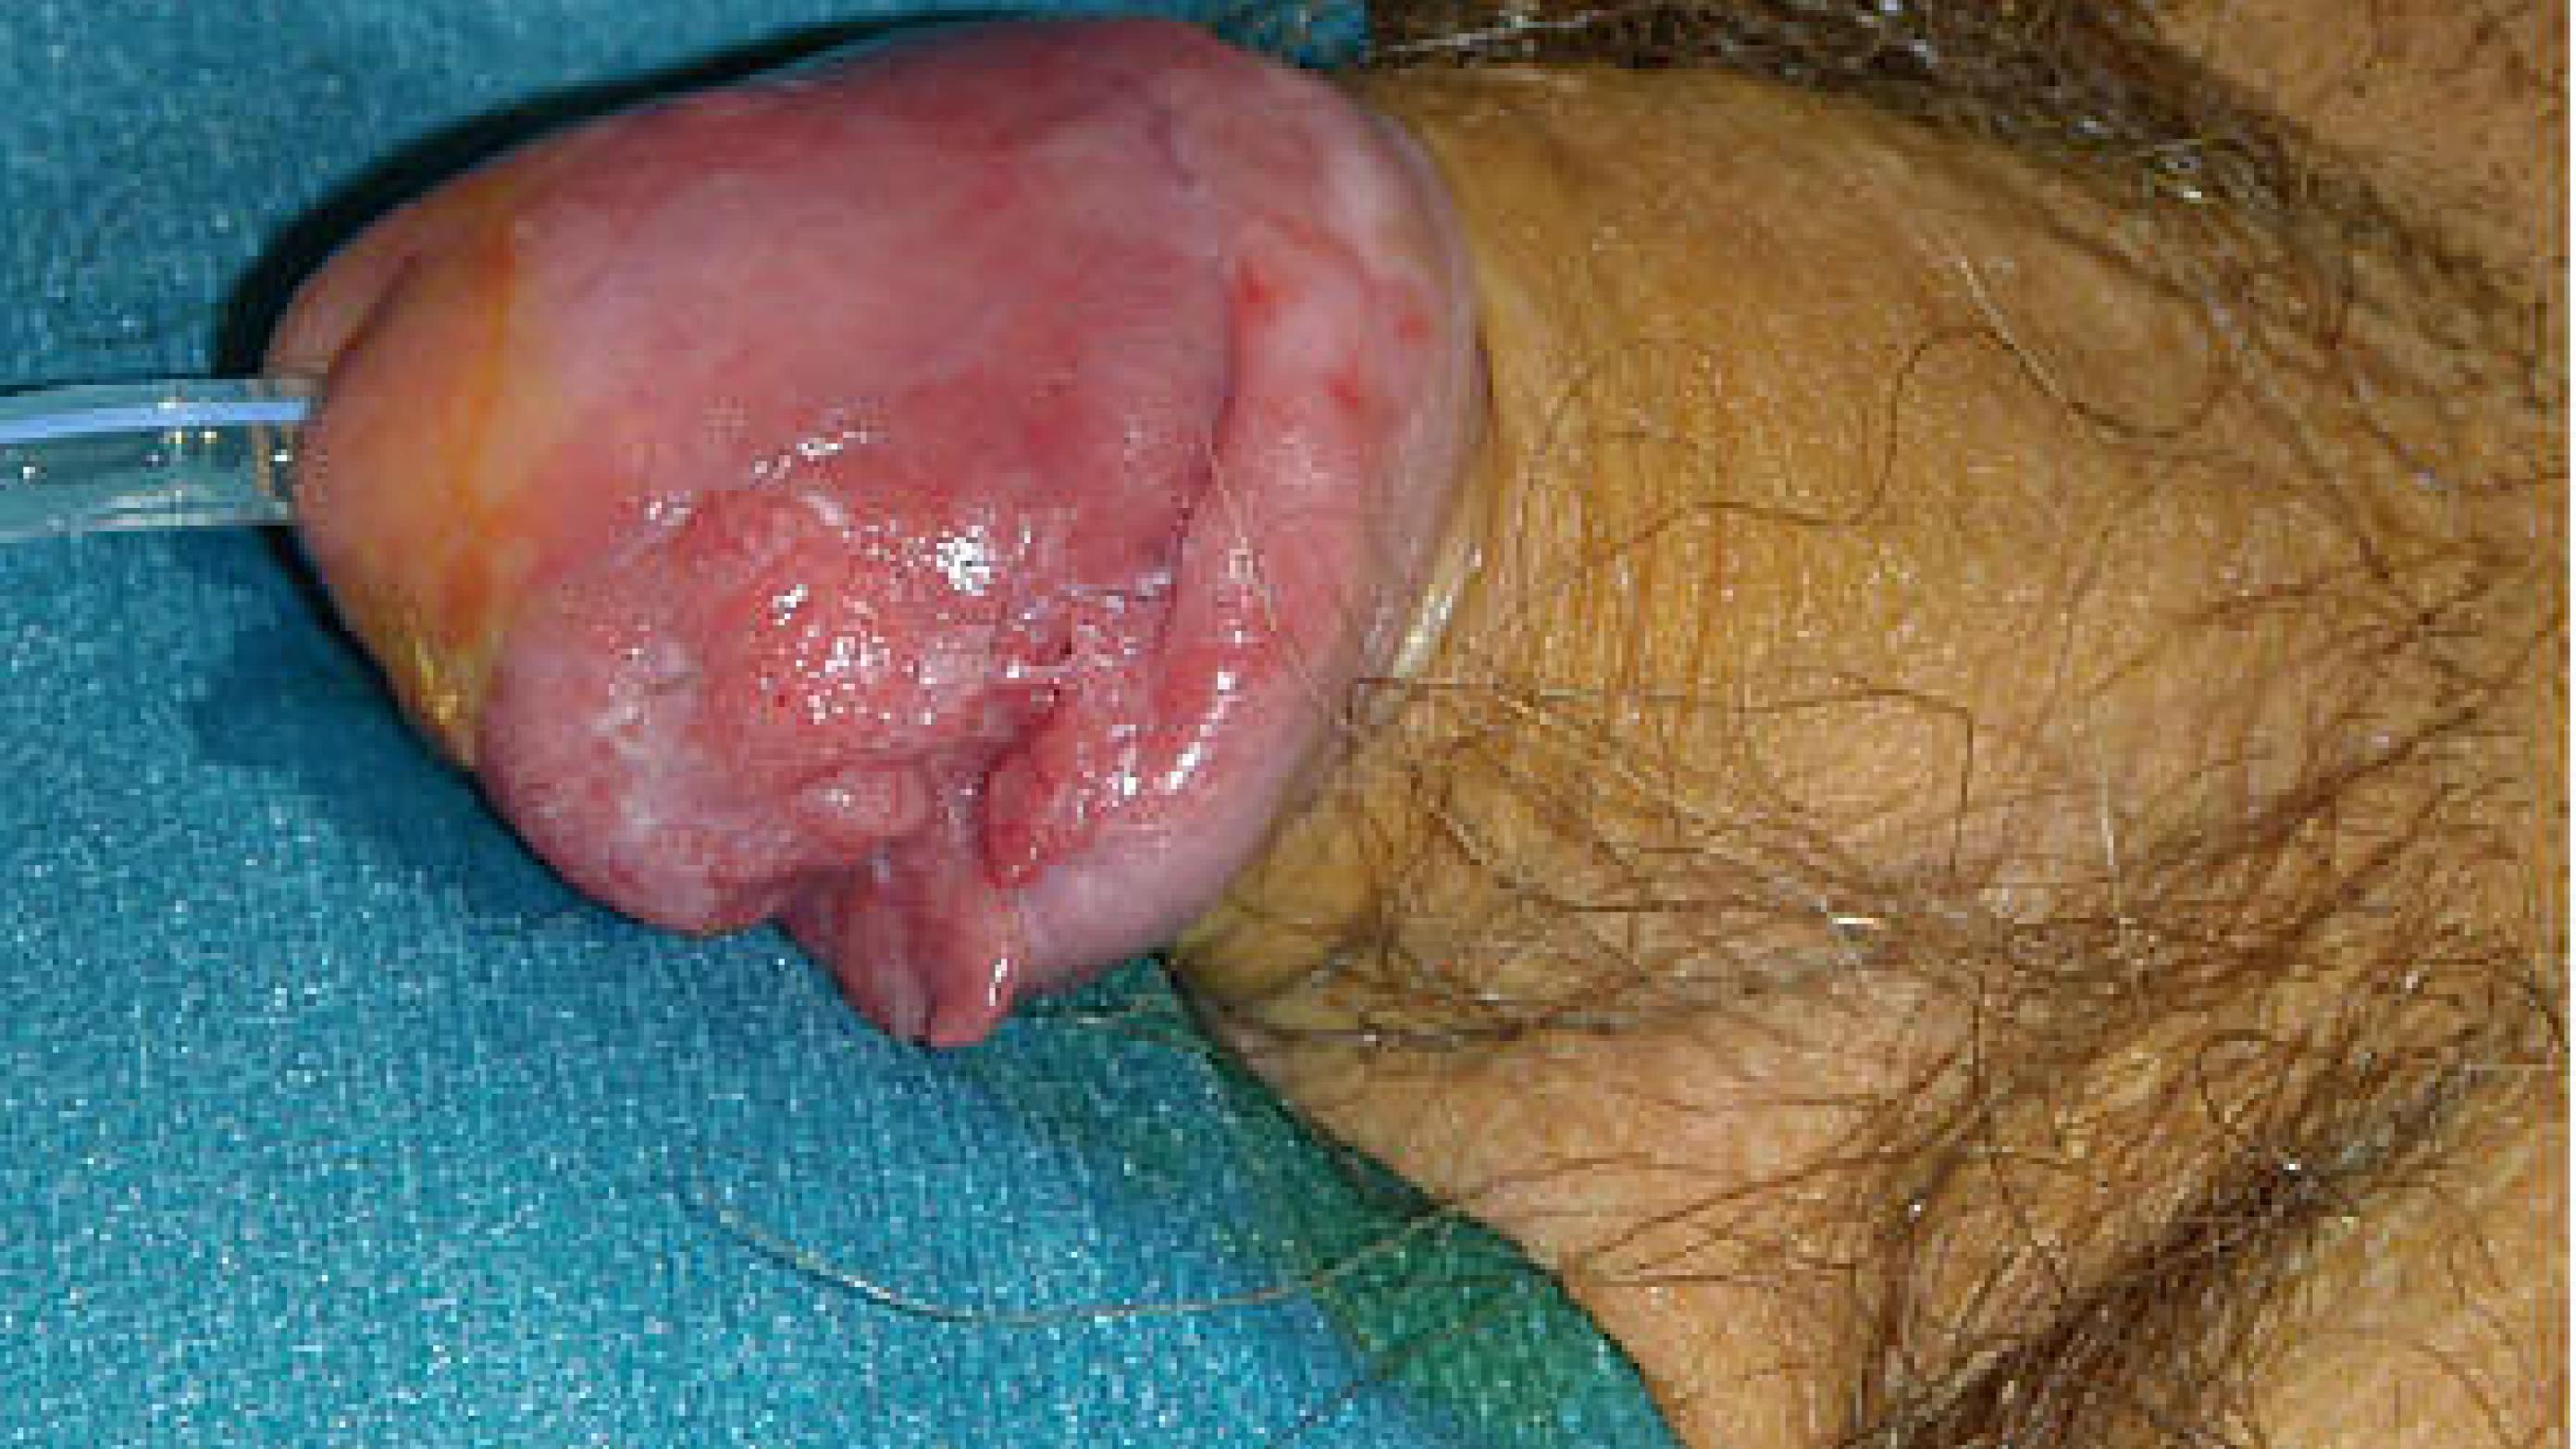 Penile tumour on the left side of the glans involving the corona glandis. Histopathological tumour growth into corpus spongiosum without urethral involvement (T2).